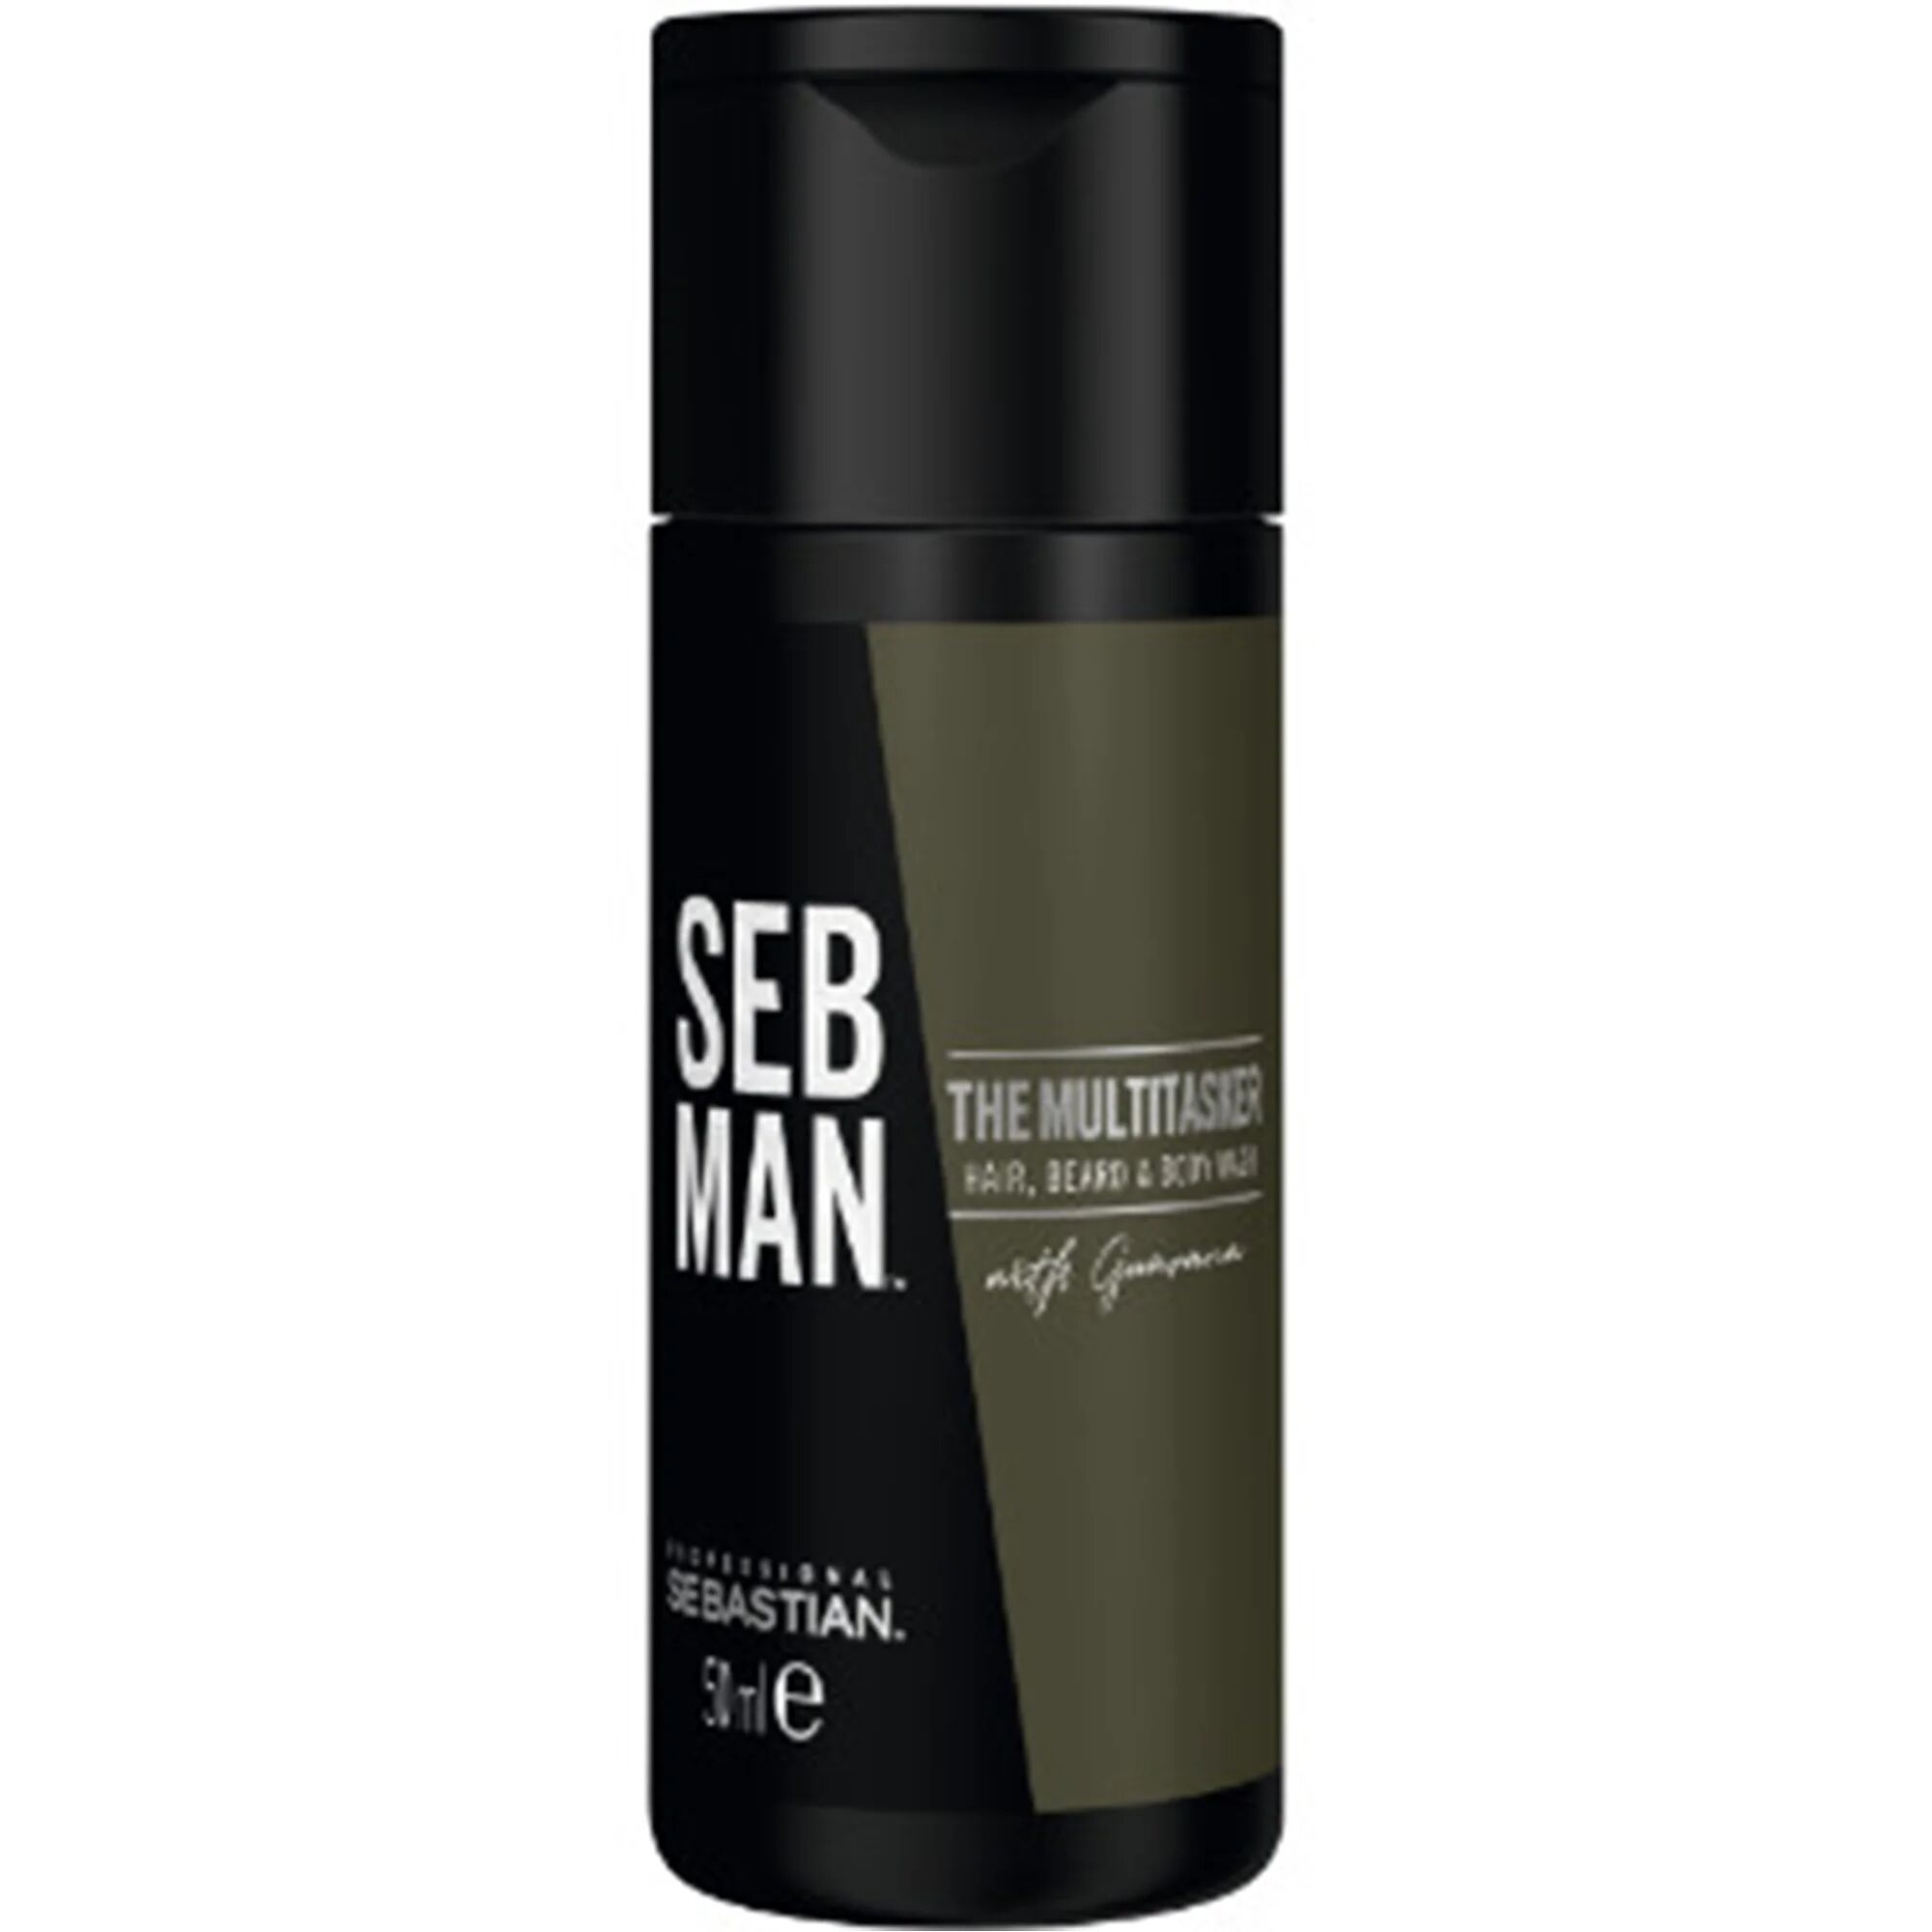 Sebastian The Multi-tasker, 50 ml Sebastian Shampoo